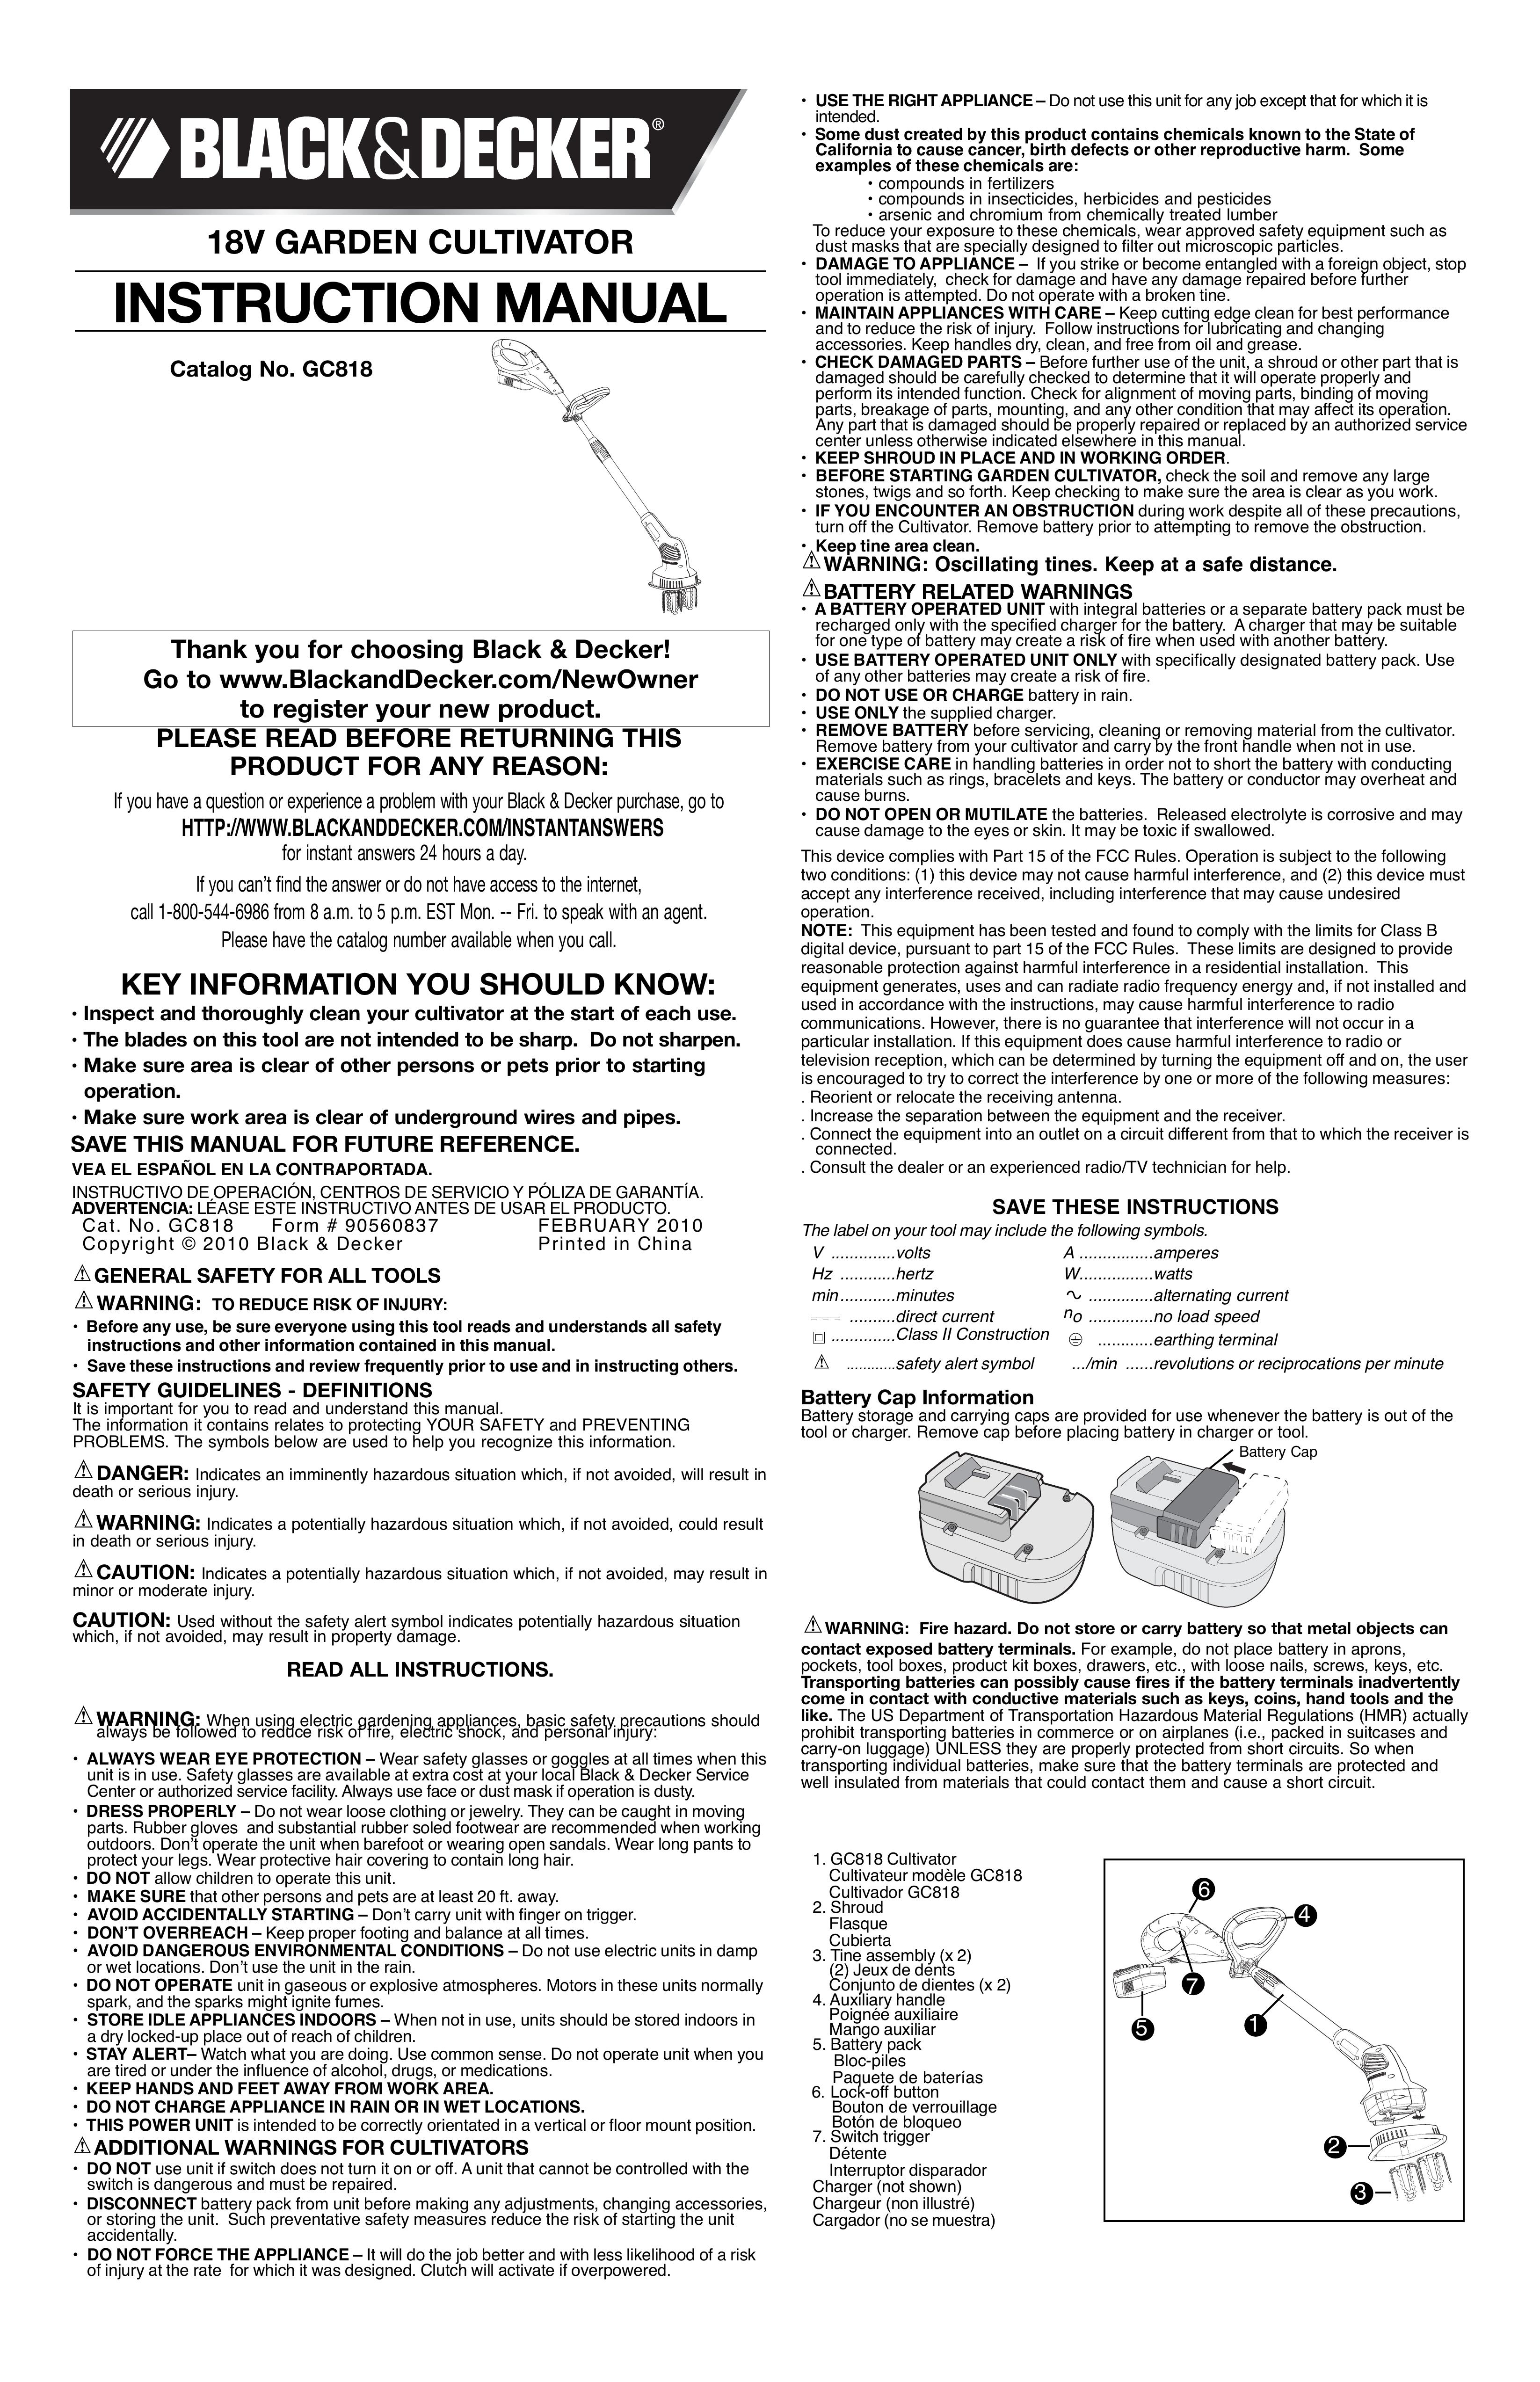 Black & Decker GC818 Cultivator User Manual